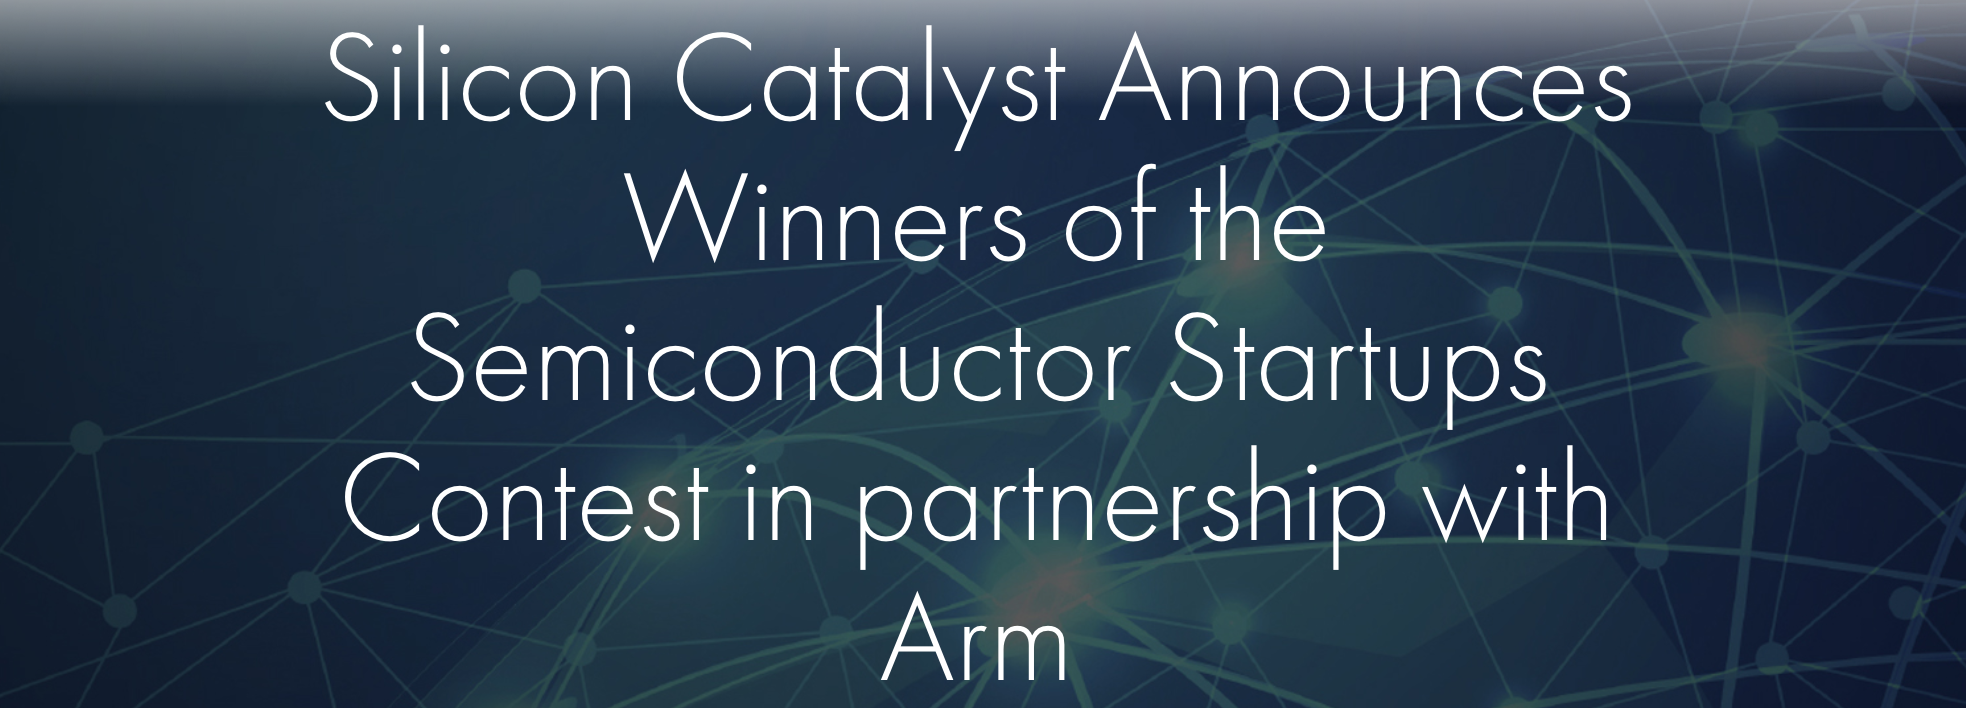 Egy pillantás a Silicon Catalyst/Arm Silicon Startups Contest nyerteseire – Semiwiki